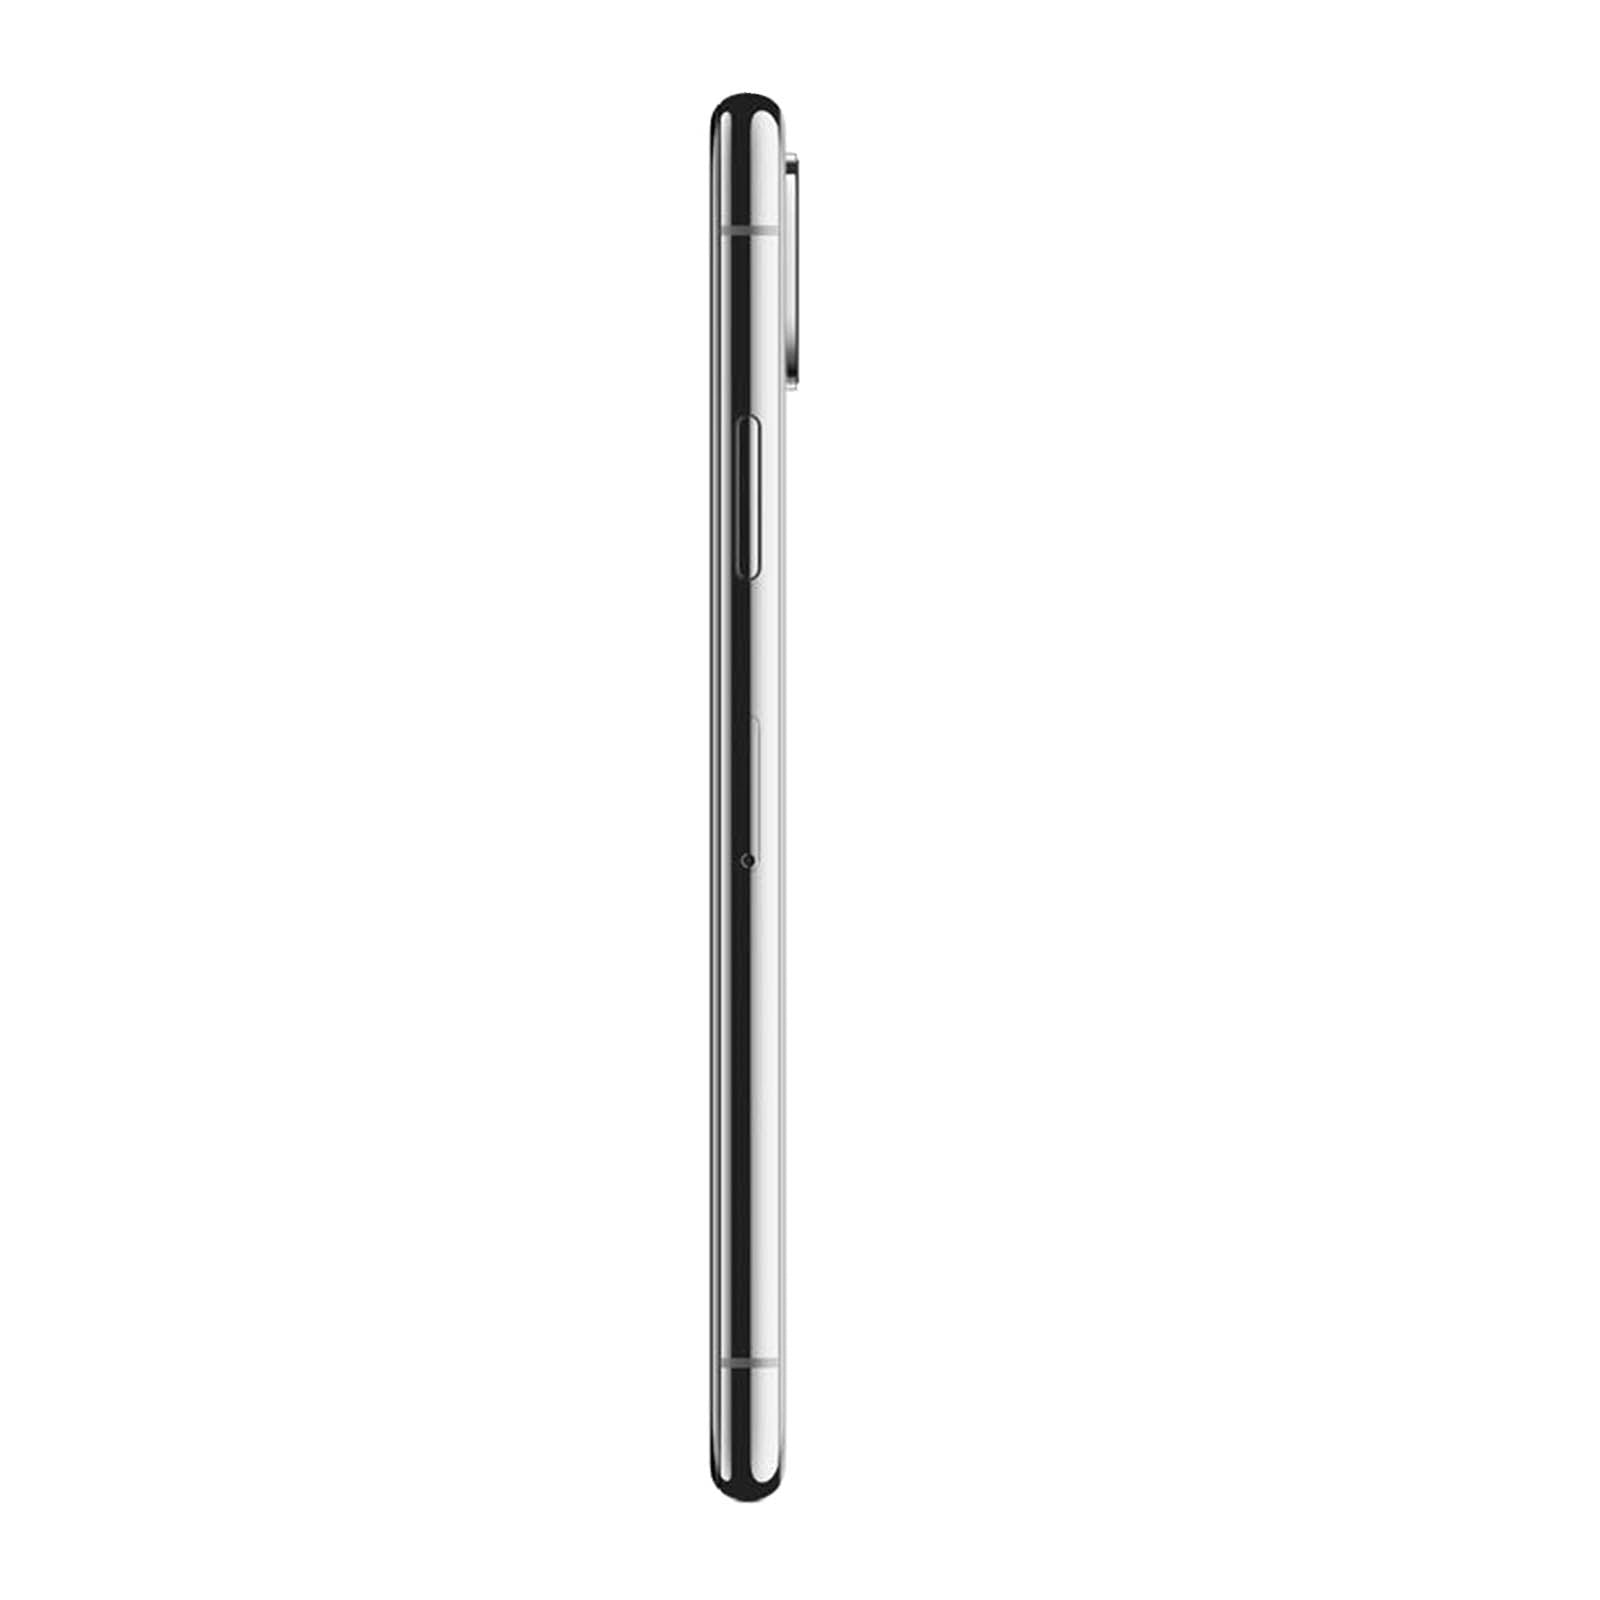 Apple iPhone XS Max 512GB Silver Fair - Unlocked